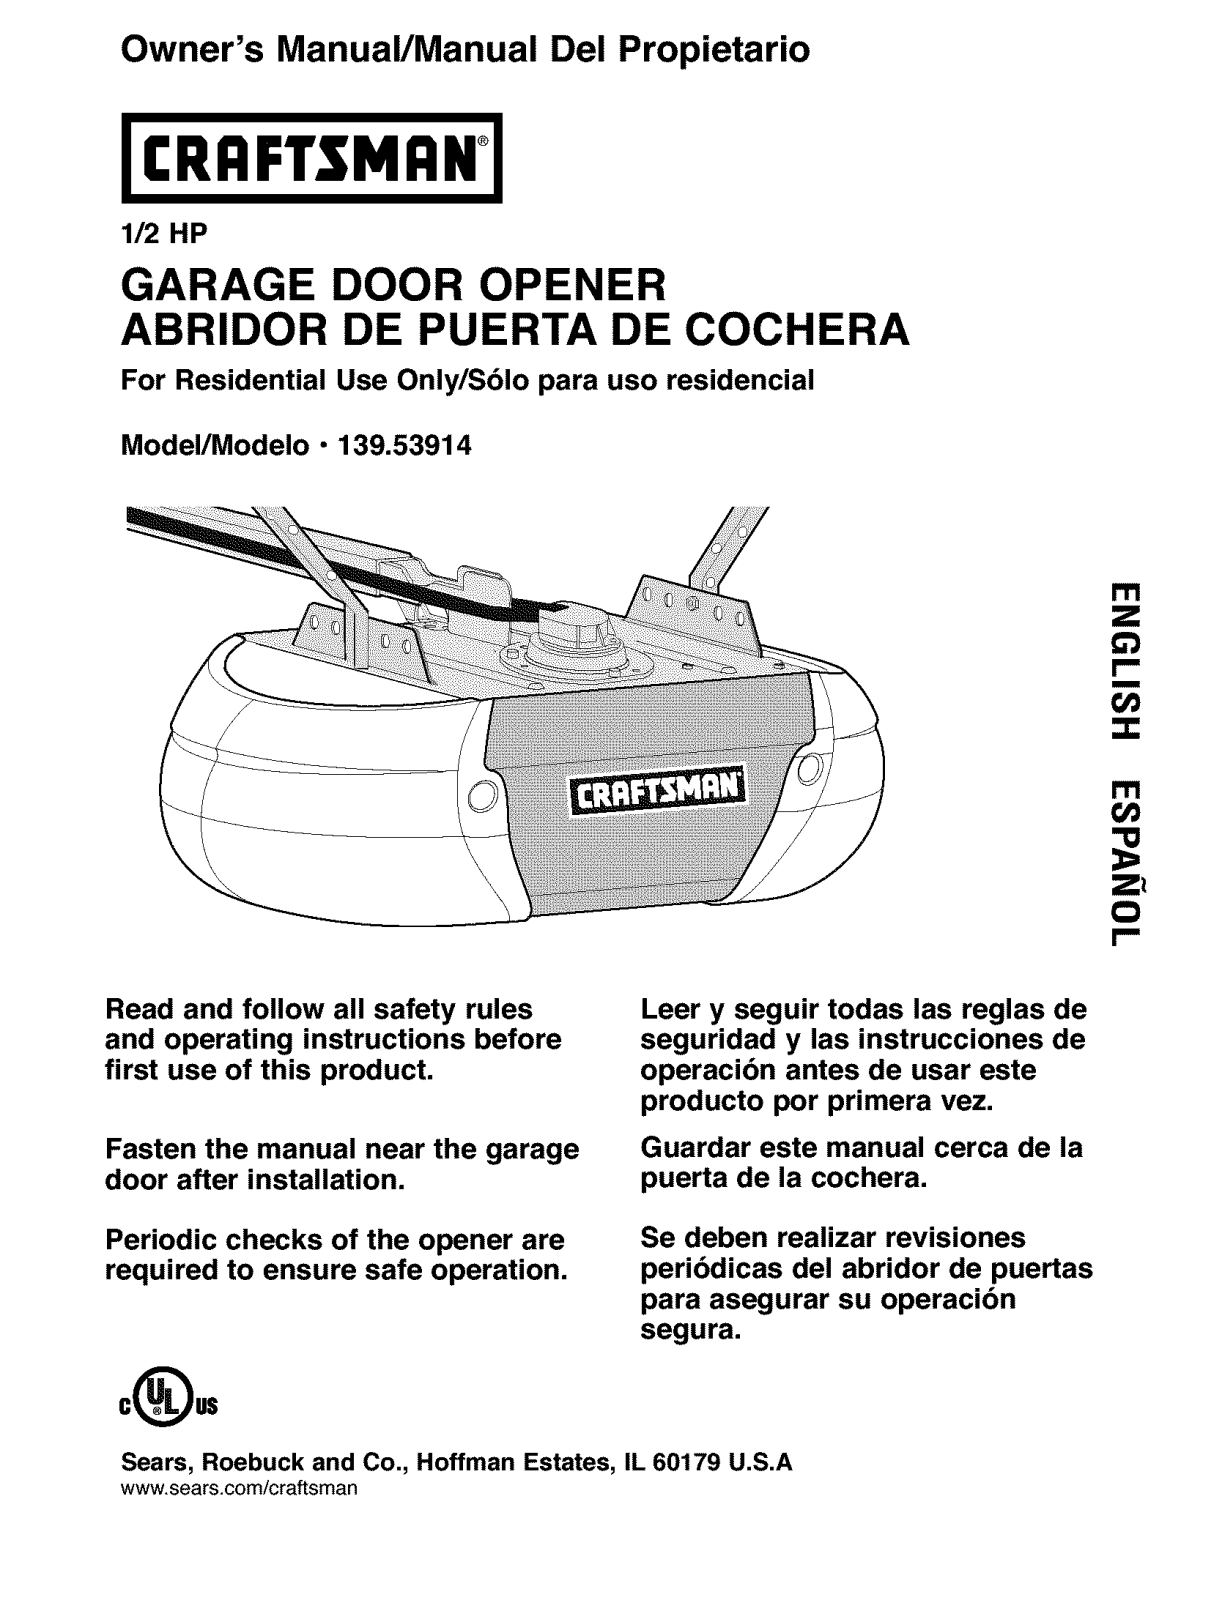 Craftsman 13953914 Owner’s Manual